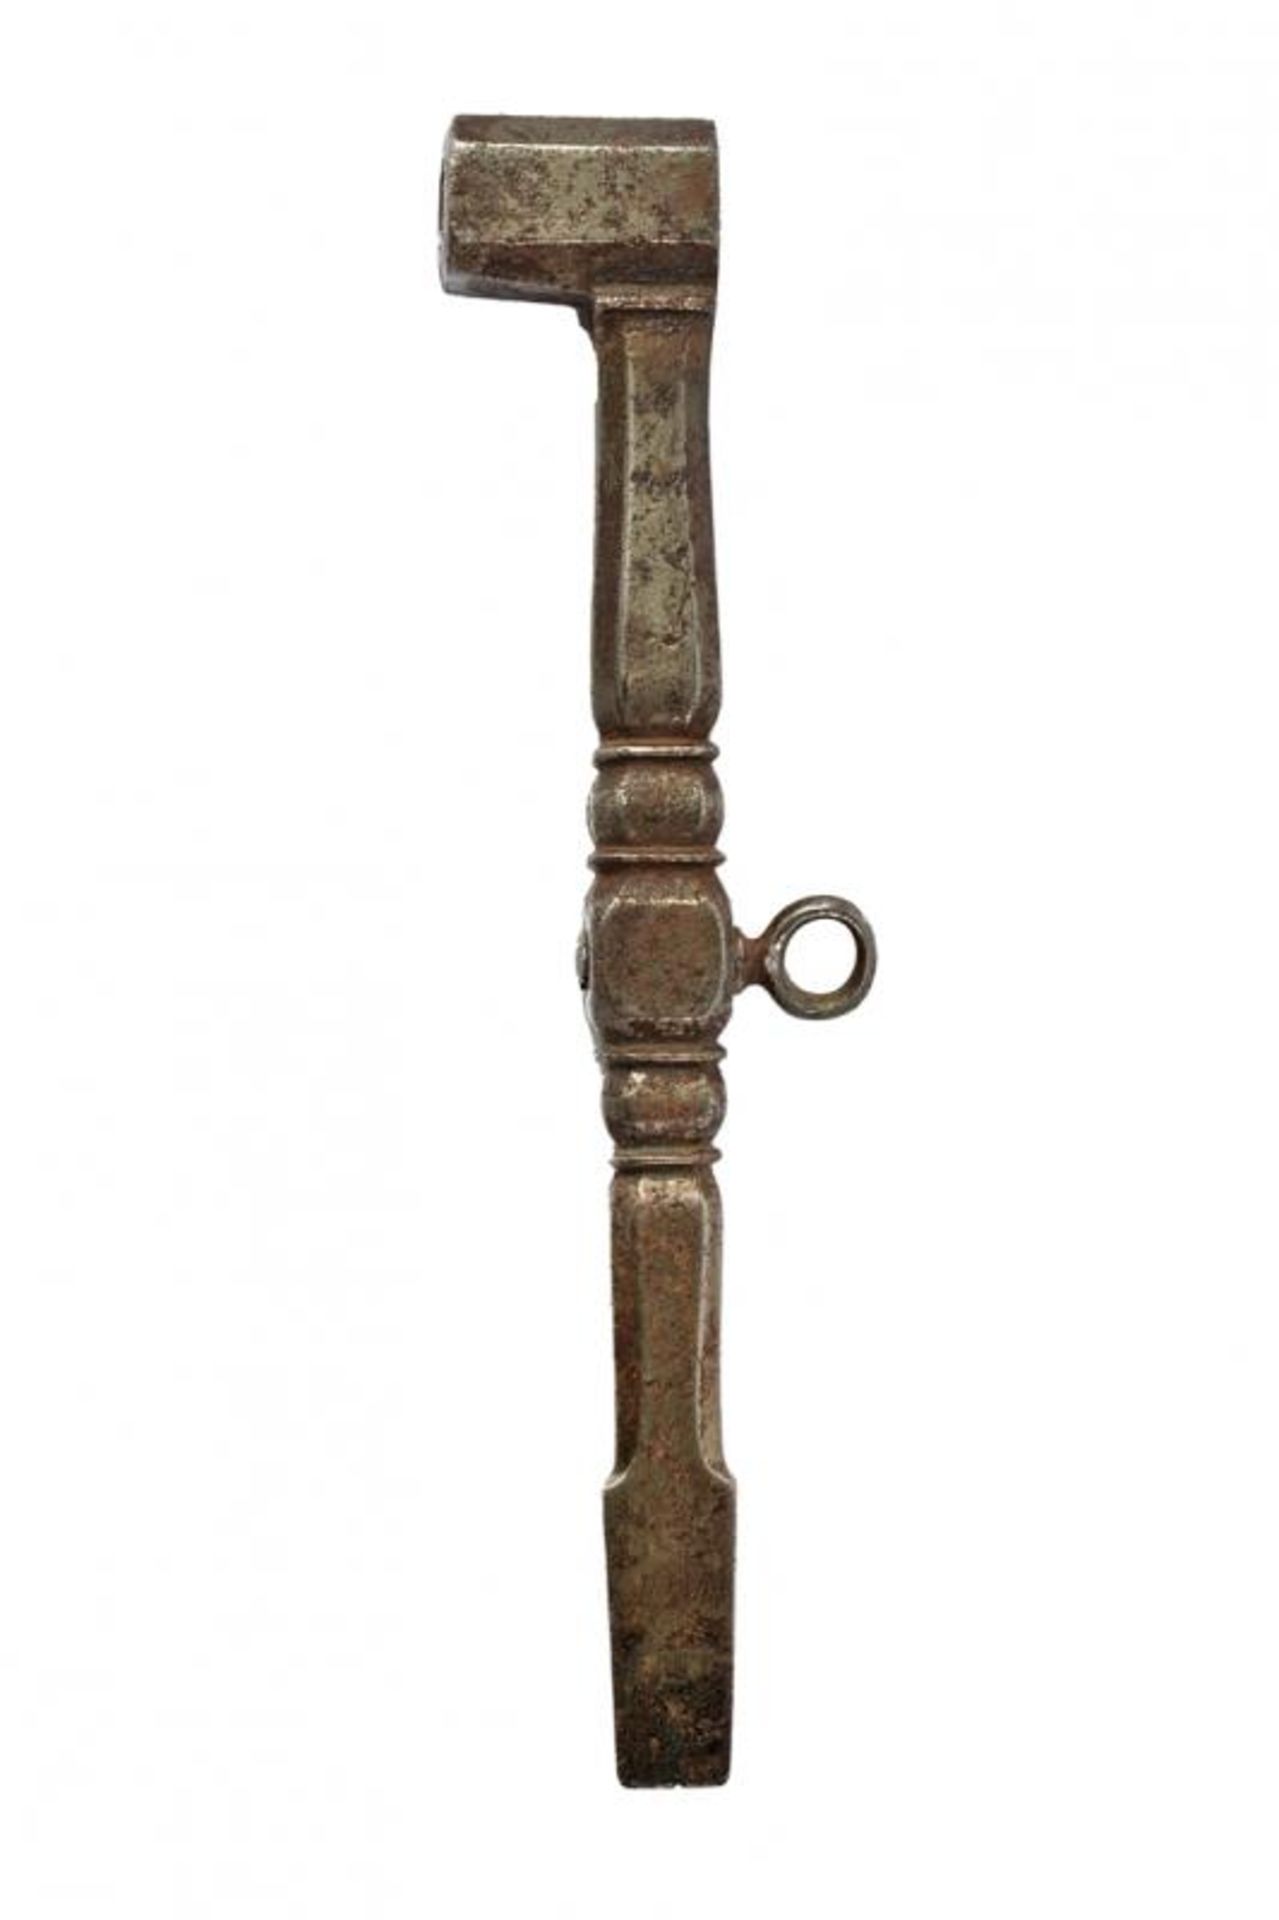 A wheel lock key - Image 4 of 4